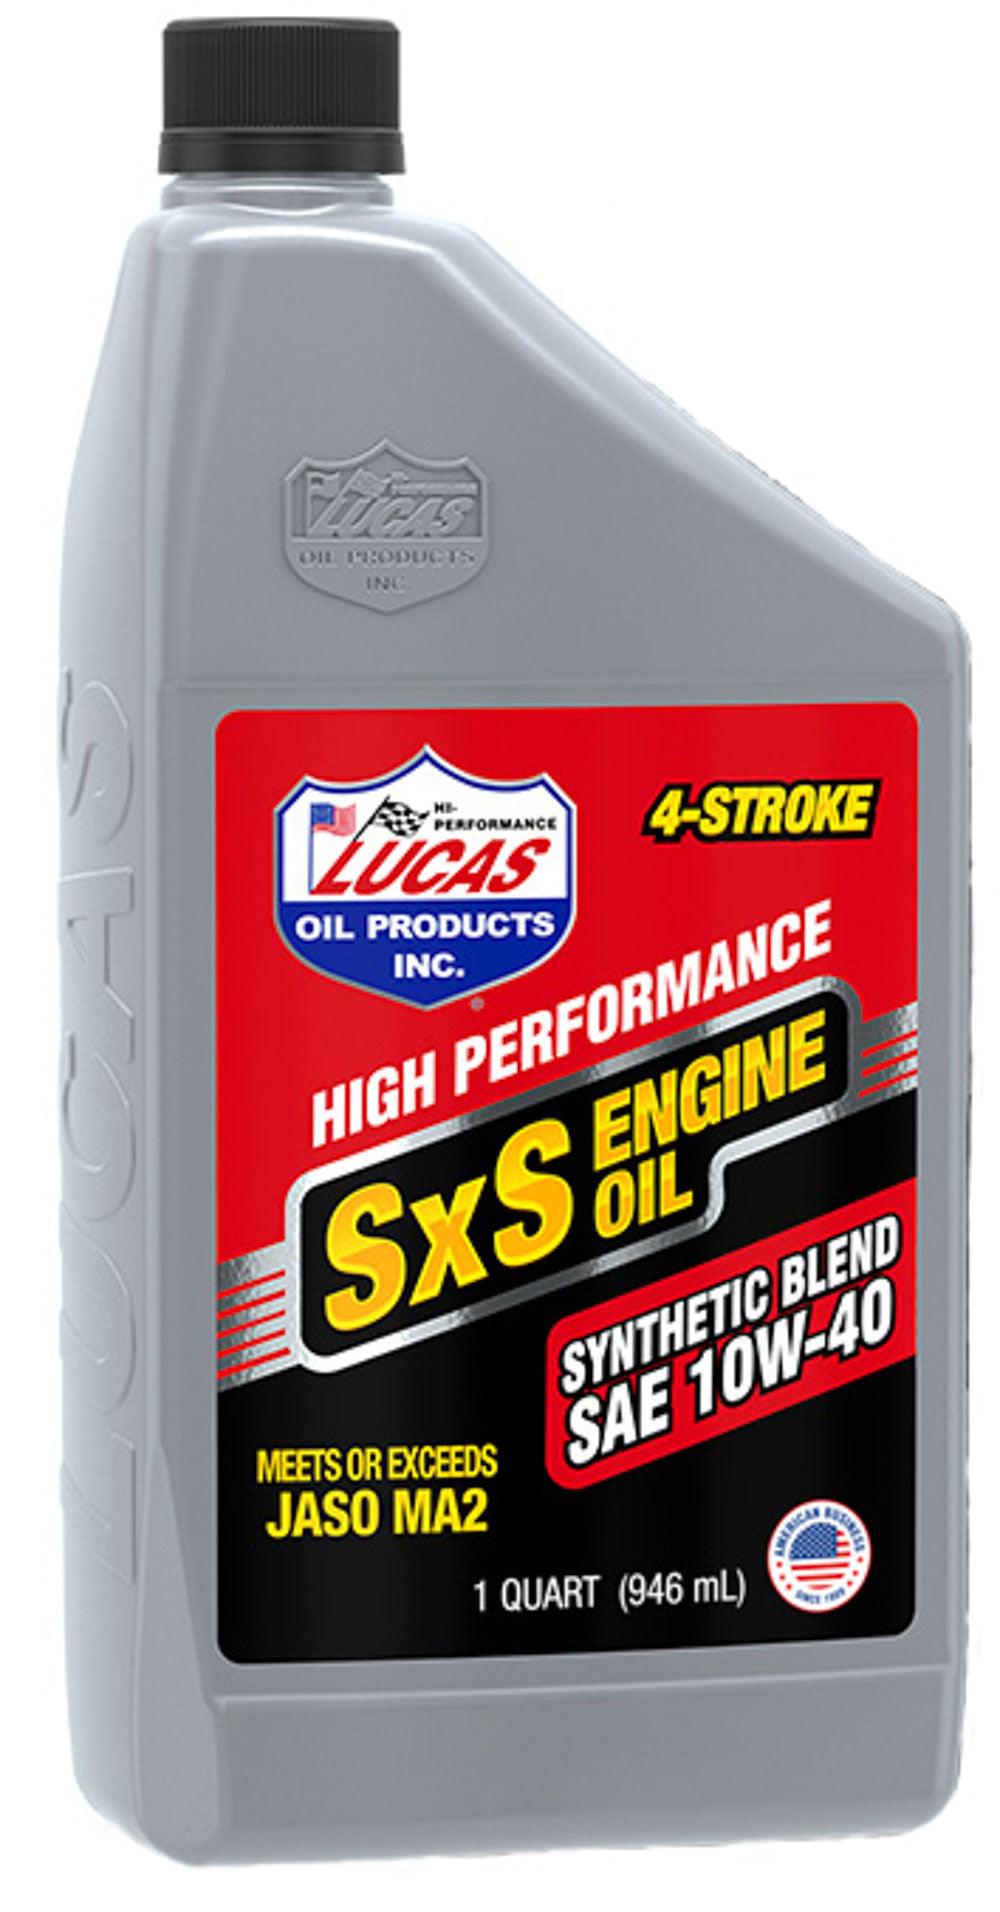 Synthetic Blend 10w40 SXS Oil 1 Quart - Burlile Performance Products